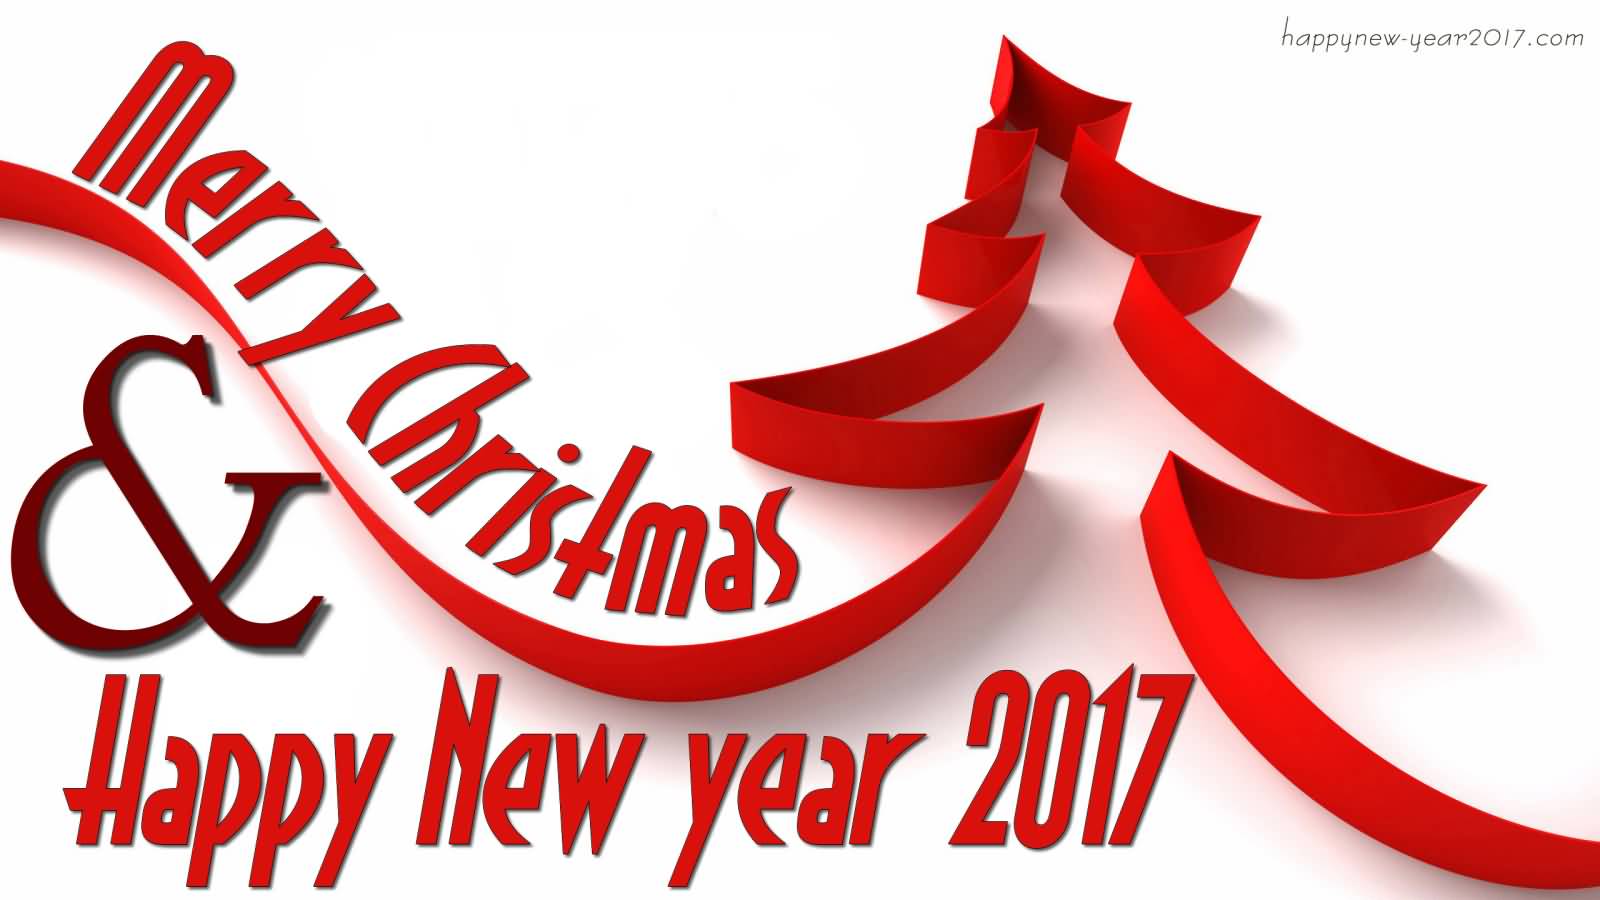 Merry Christmas Happy New Year 2017